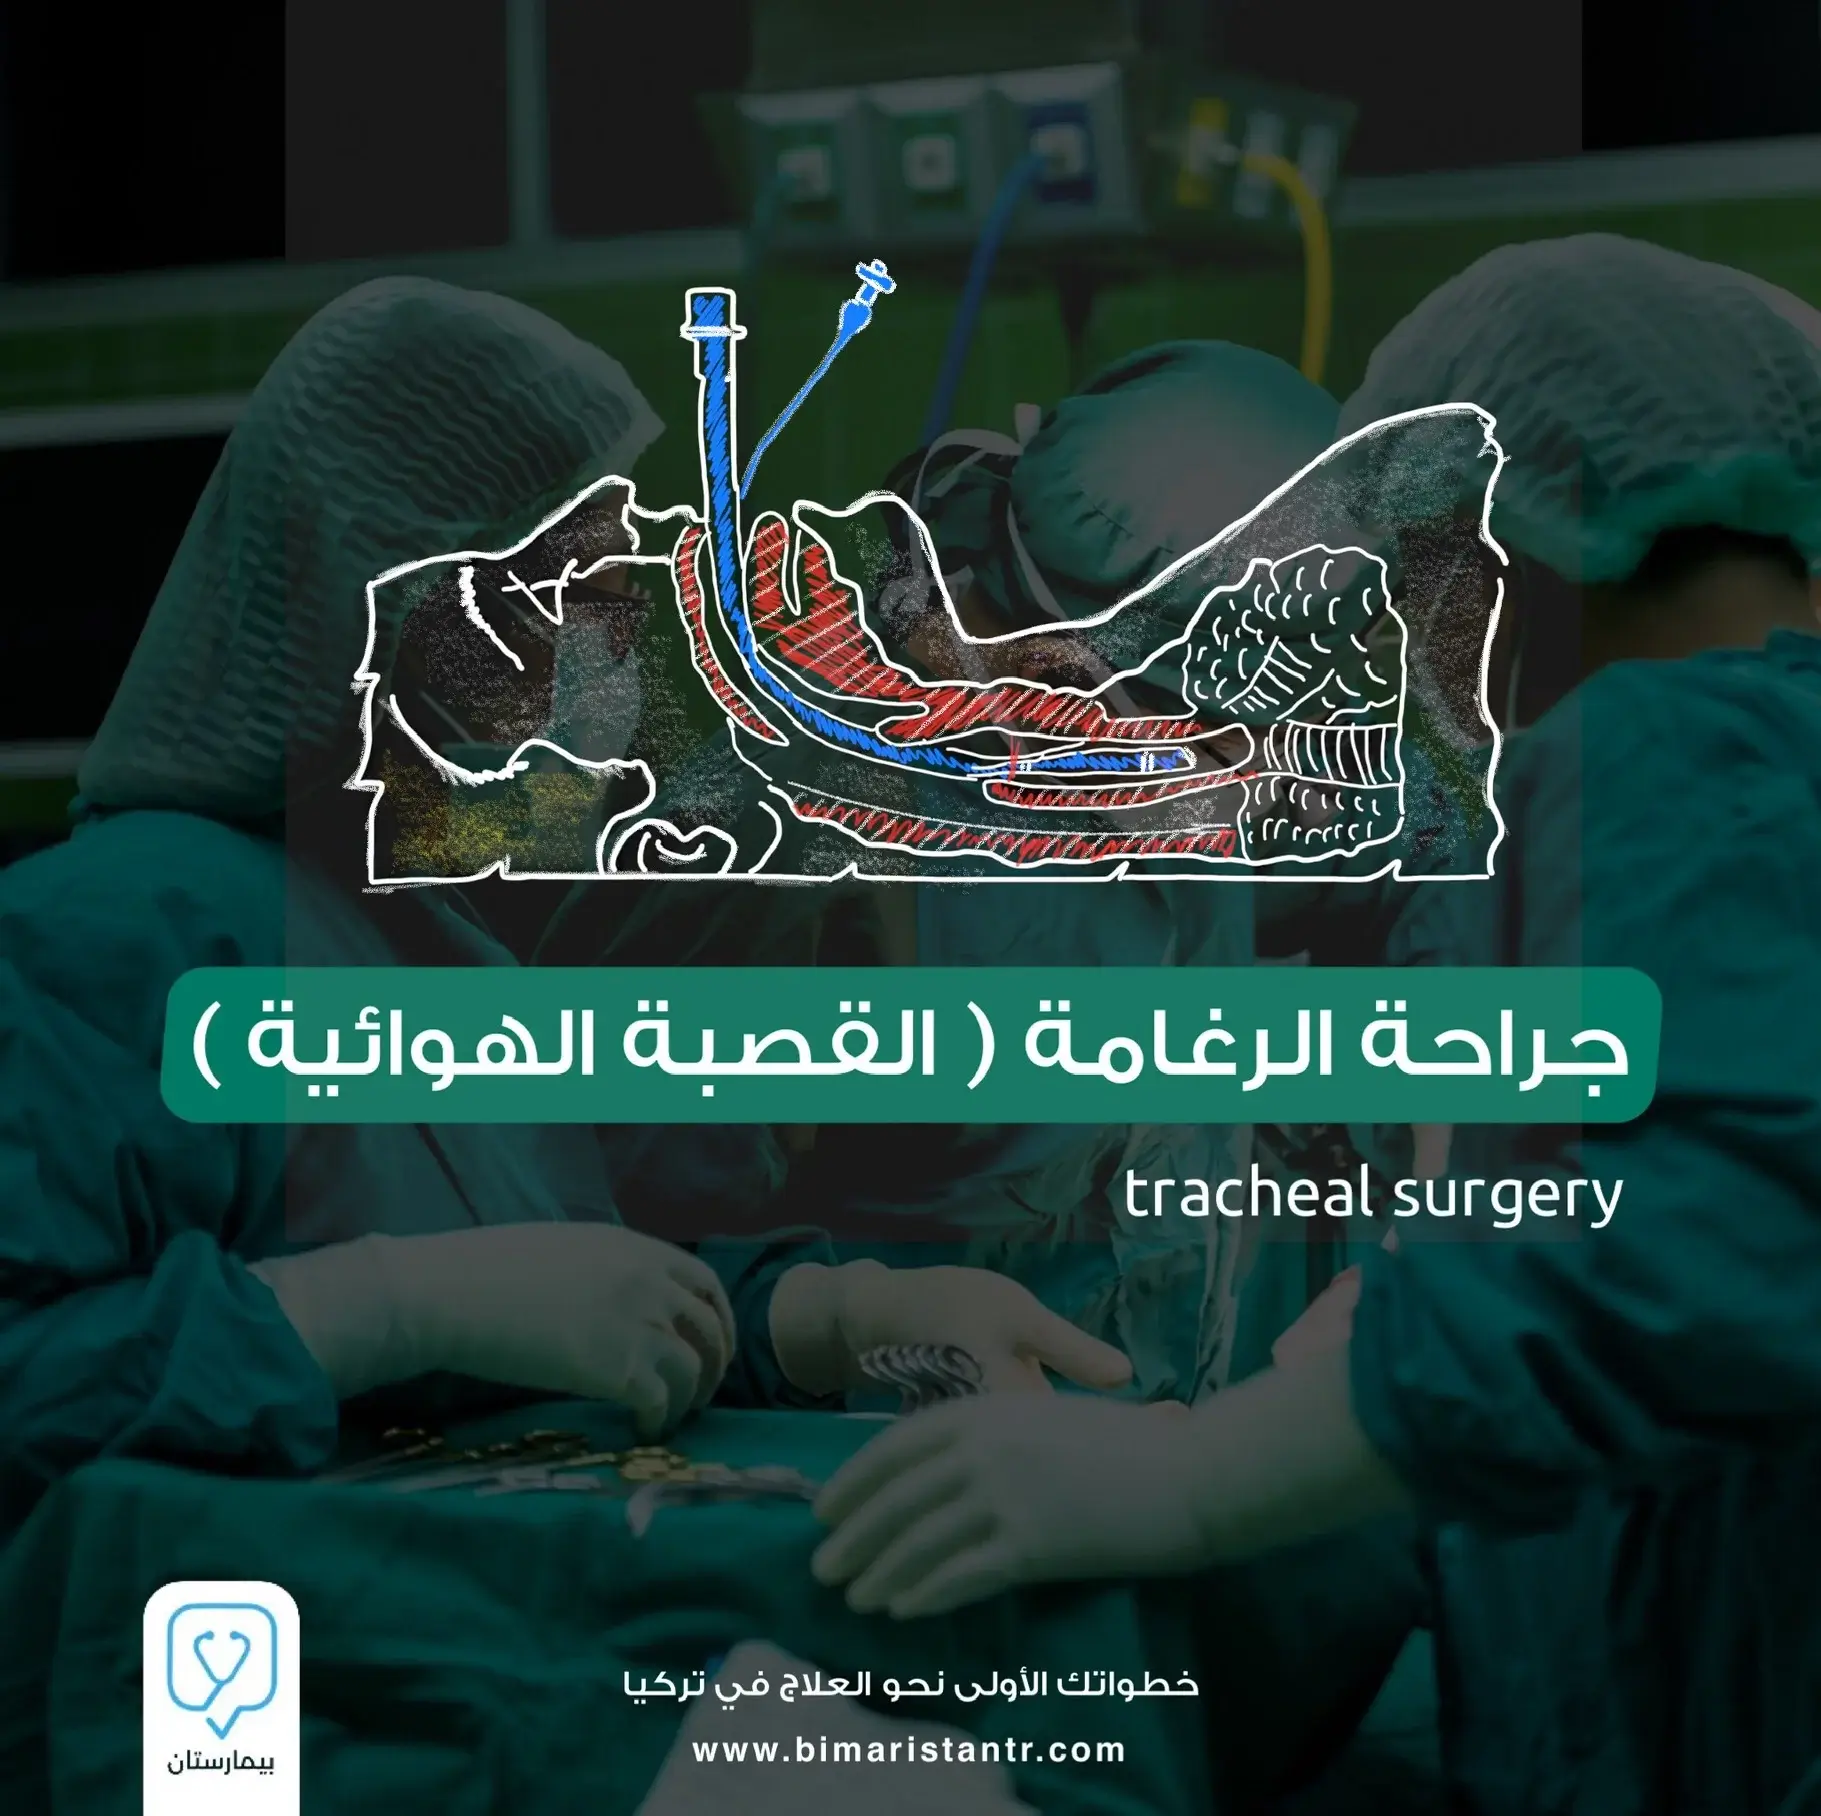 Endotracheal surgery in Turkey